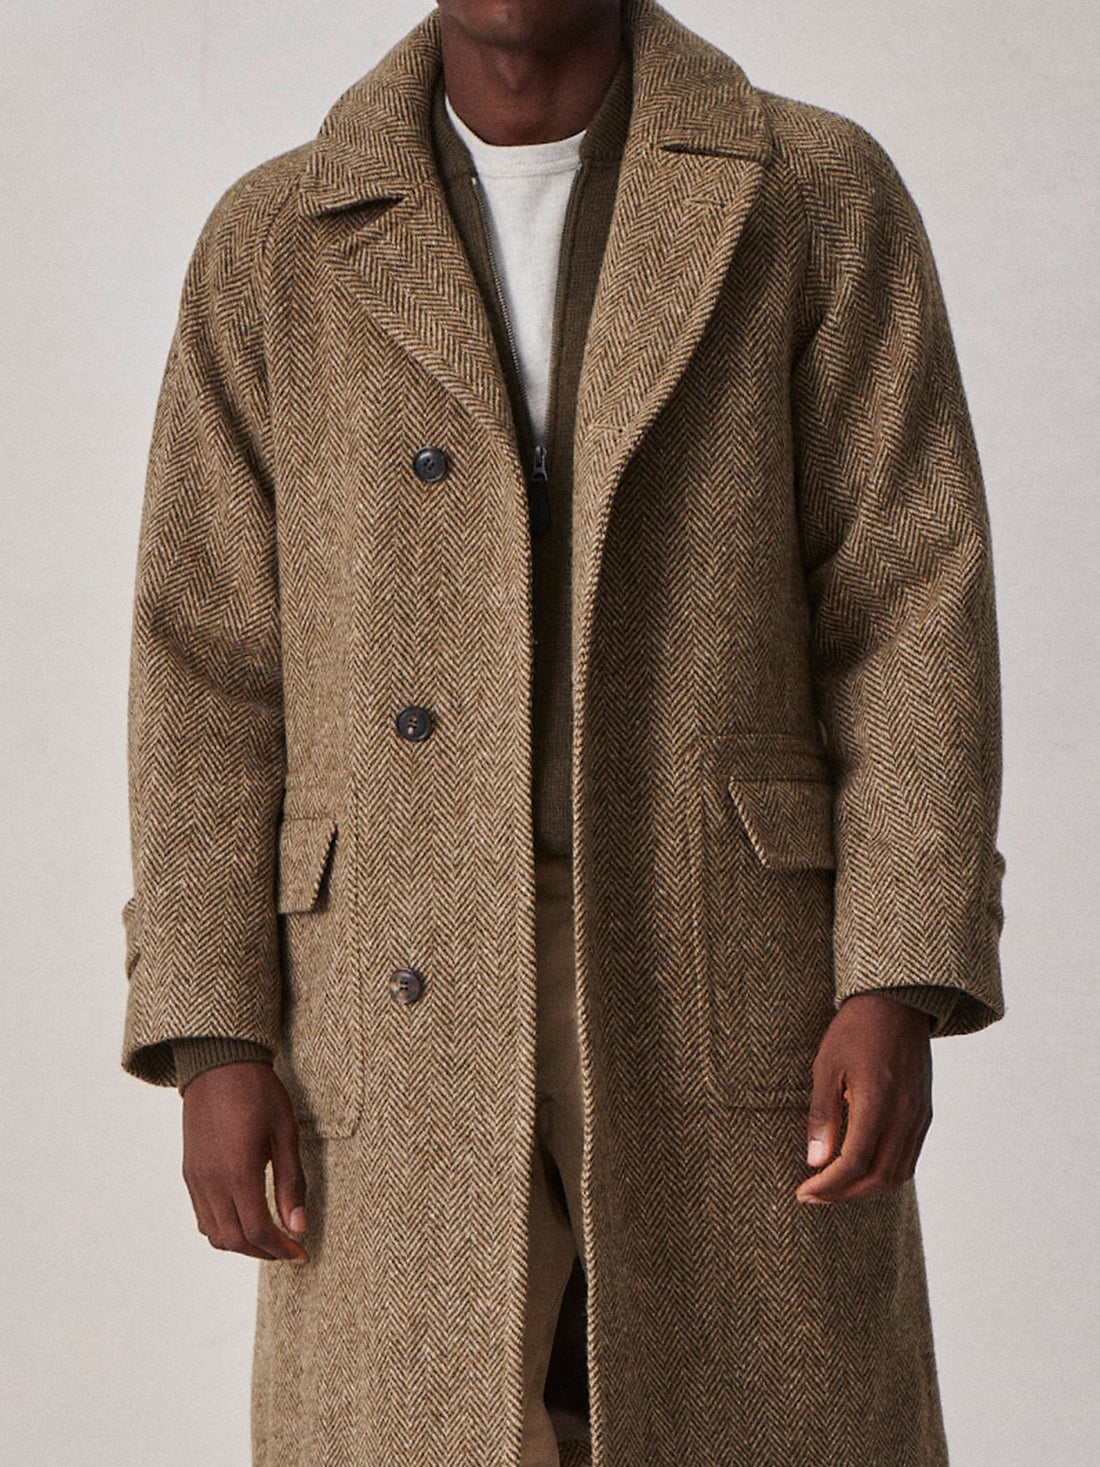 1920s Men’s Coats & Jackets History DONEGAL CHEVRON TWEED BALMACAAN COAT buck mason  AT vintagedancer.com